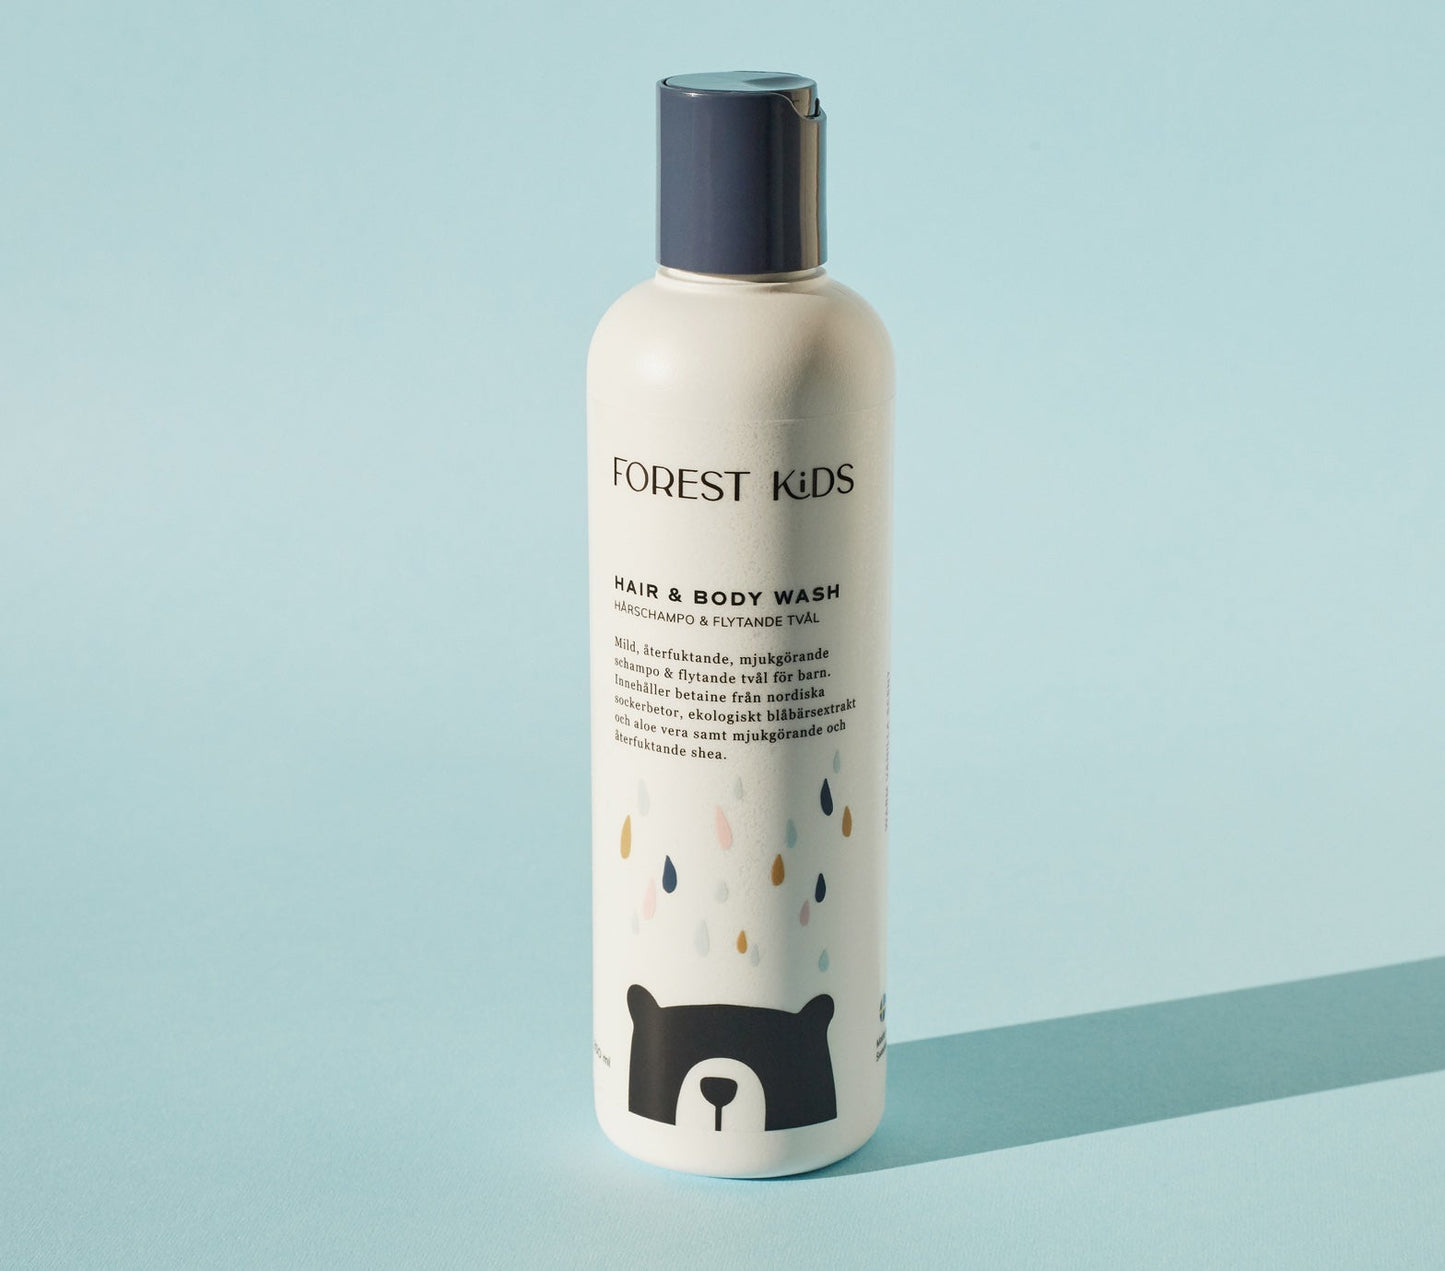 Forest Kids mild and moisturizing shampoo & body wash.